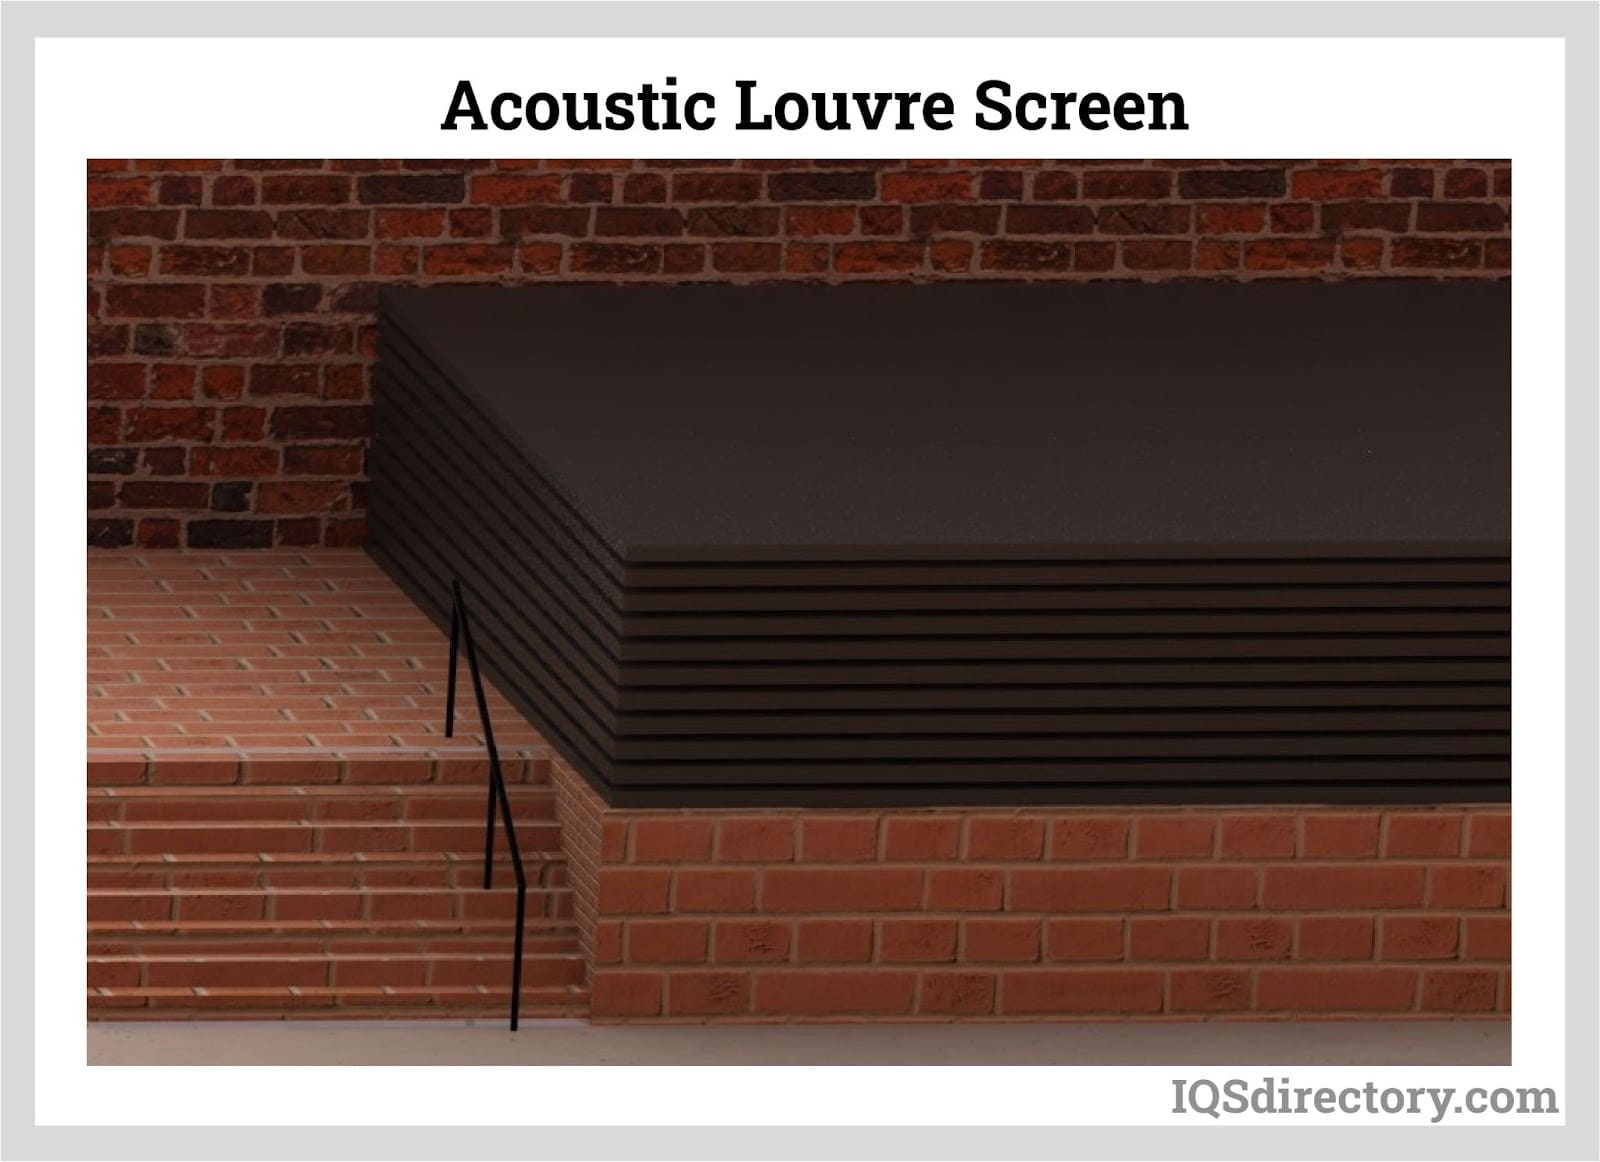  Acoustic Louvre Screen